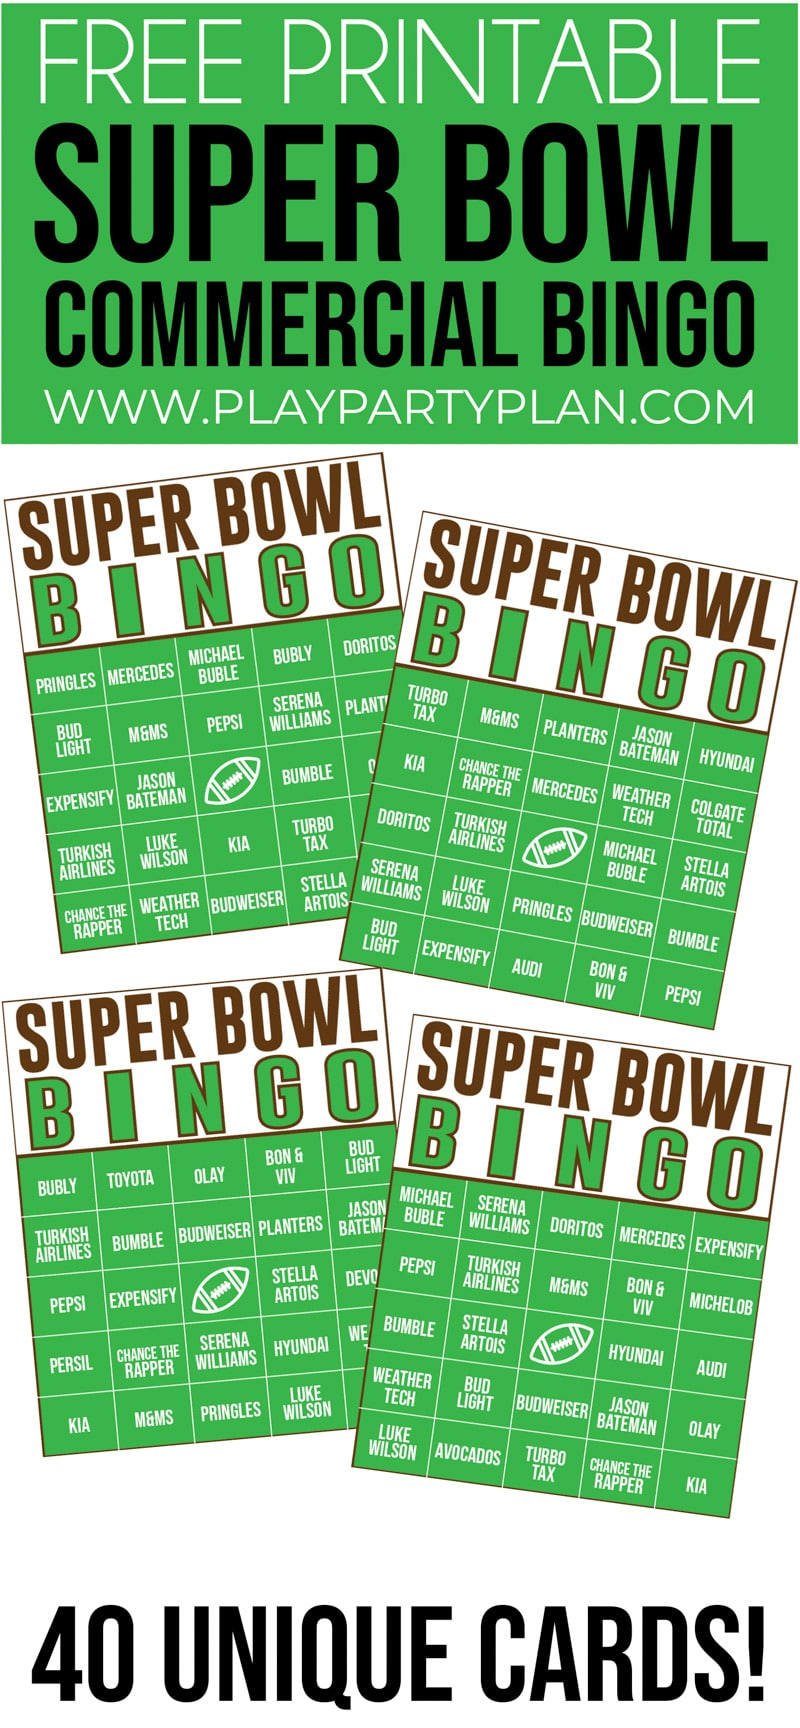 Printable Bingo Cards For Super Bowl Commercials 